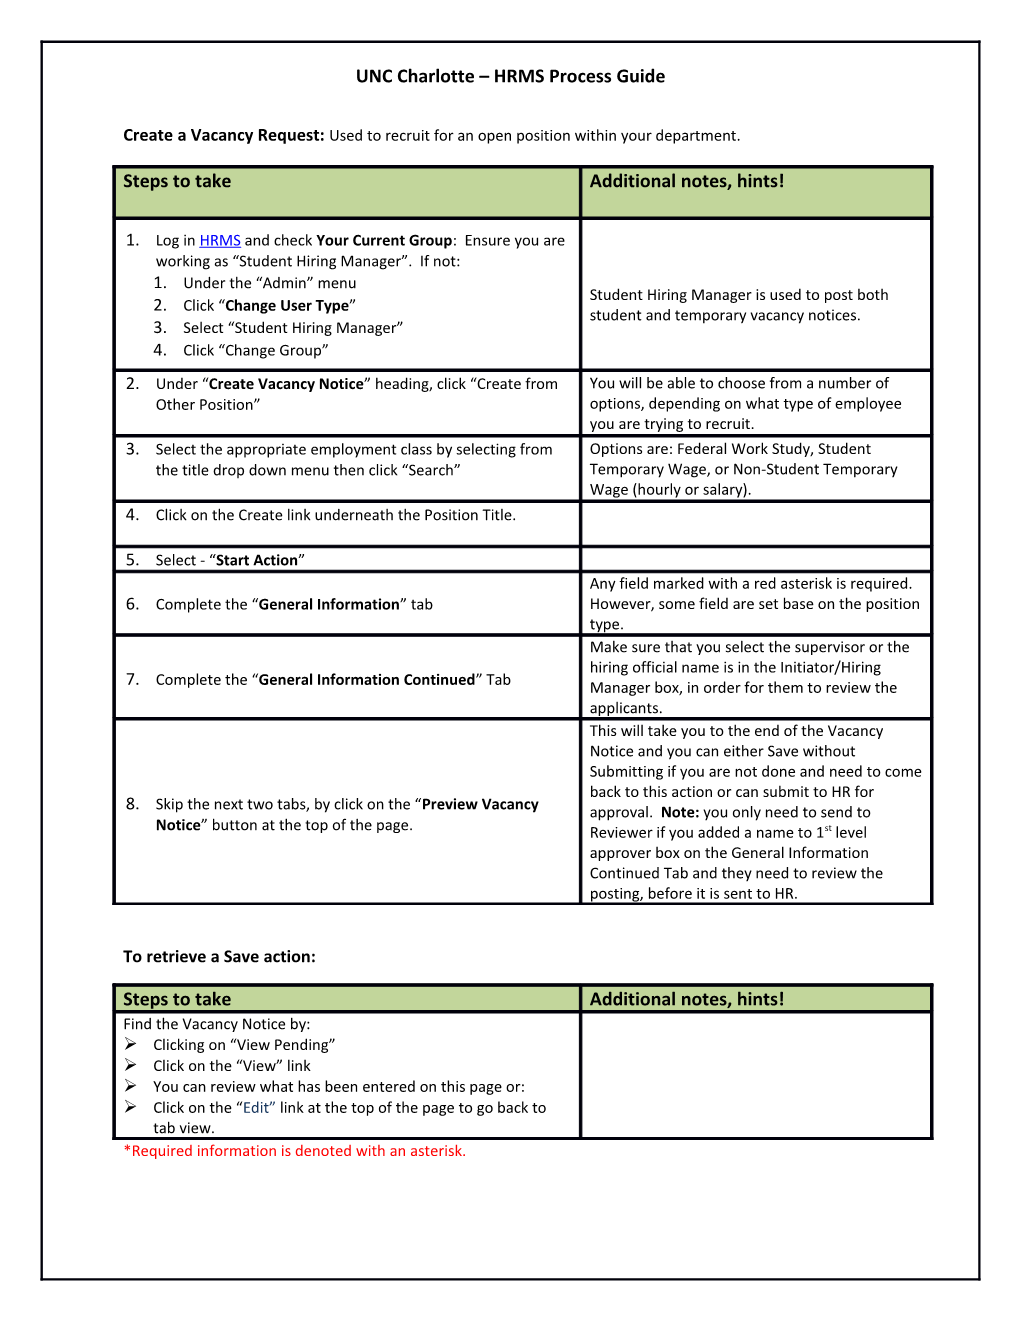 UNC Charlotte HRMS Process Guide